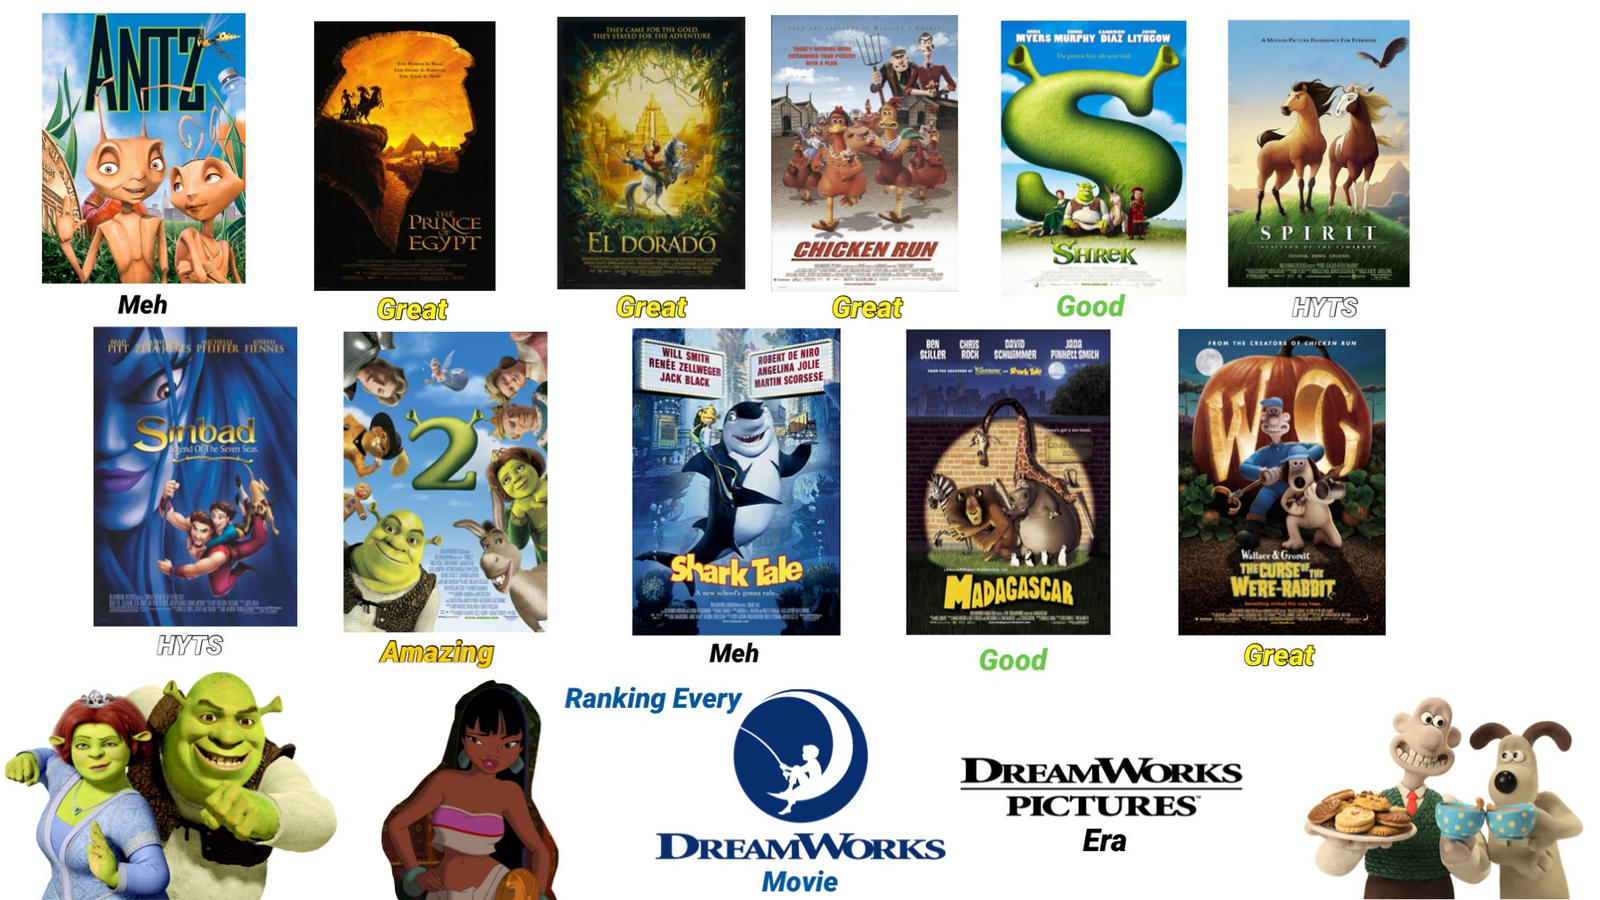 Ranking Every DreamWorks Movie (DreamWorks Era) by DropBox5555 on DeviantArt